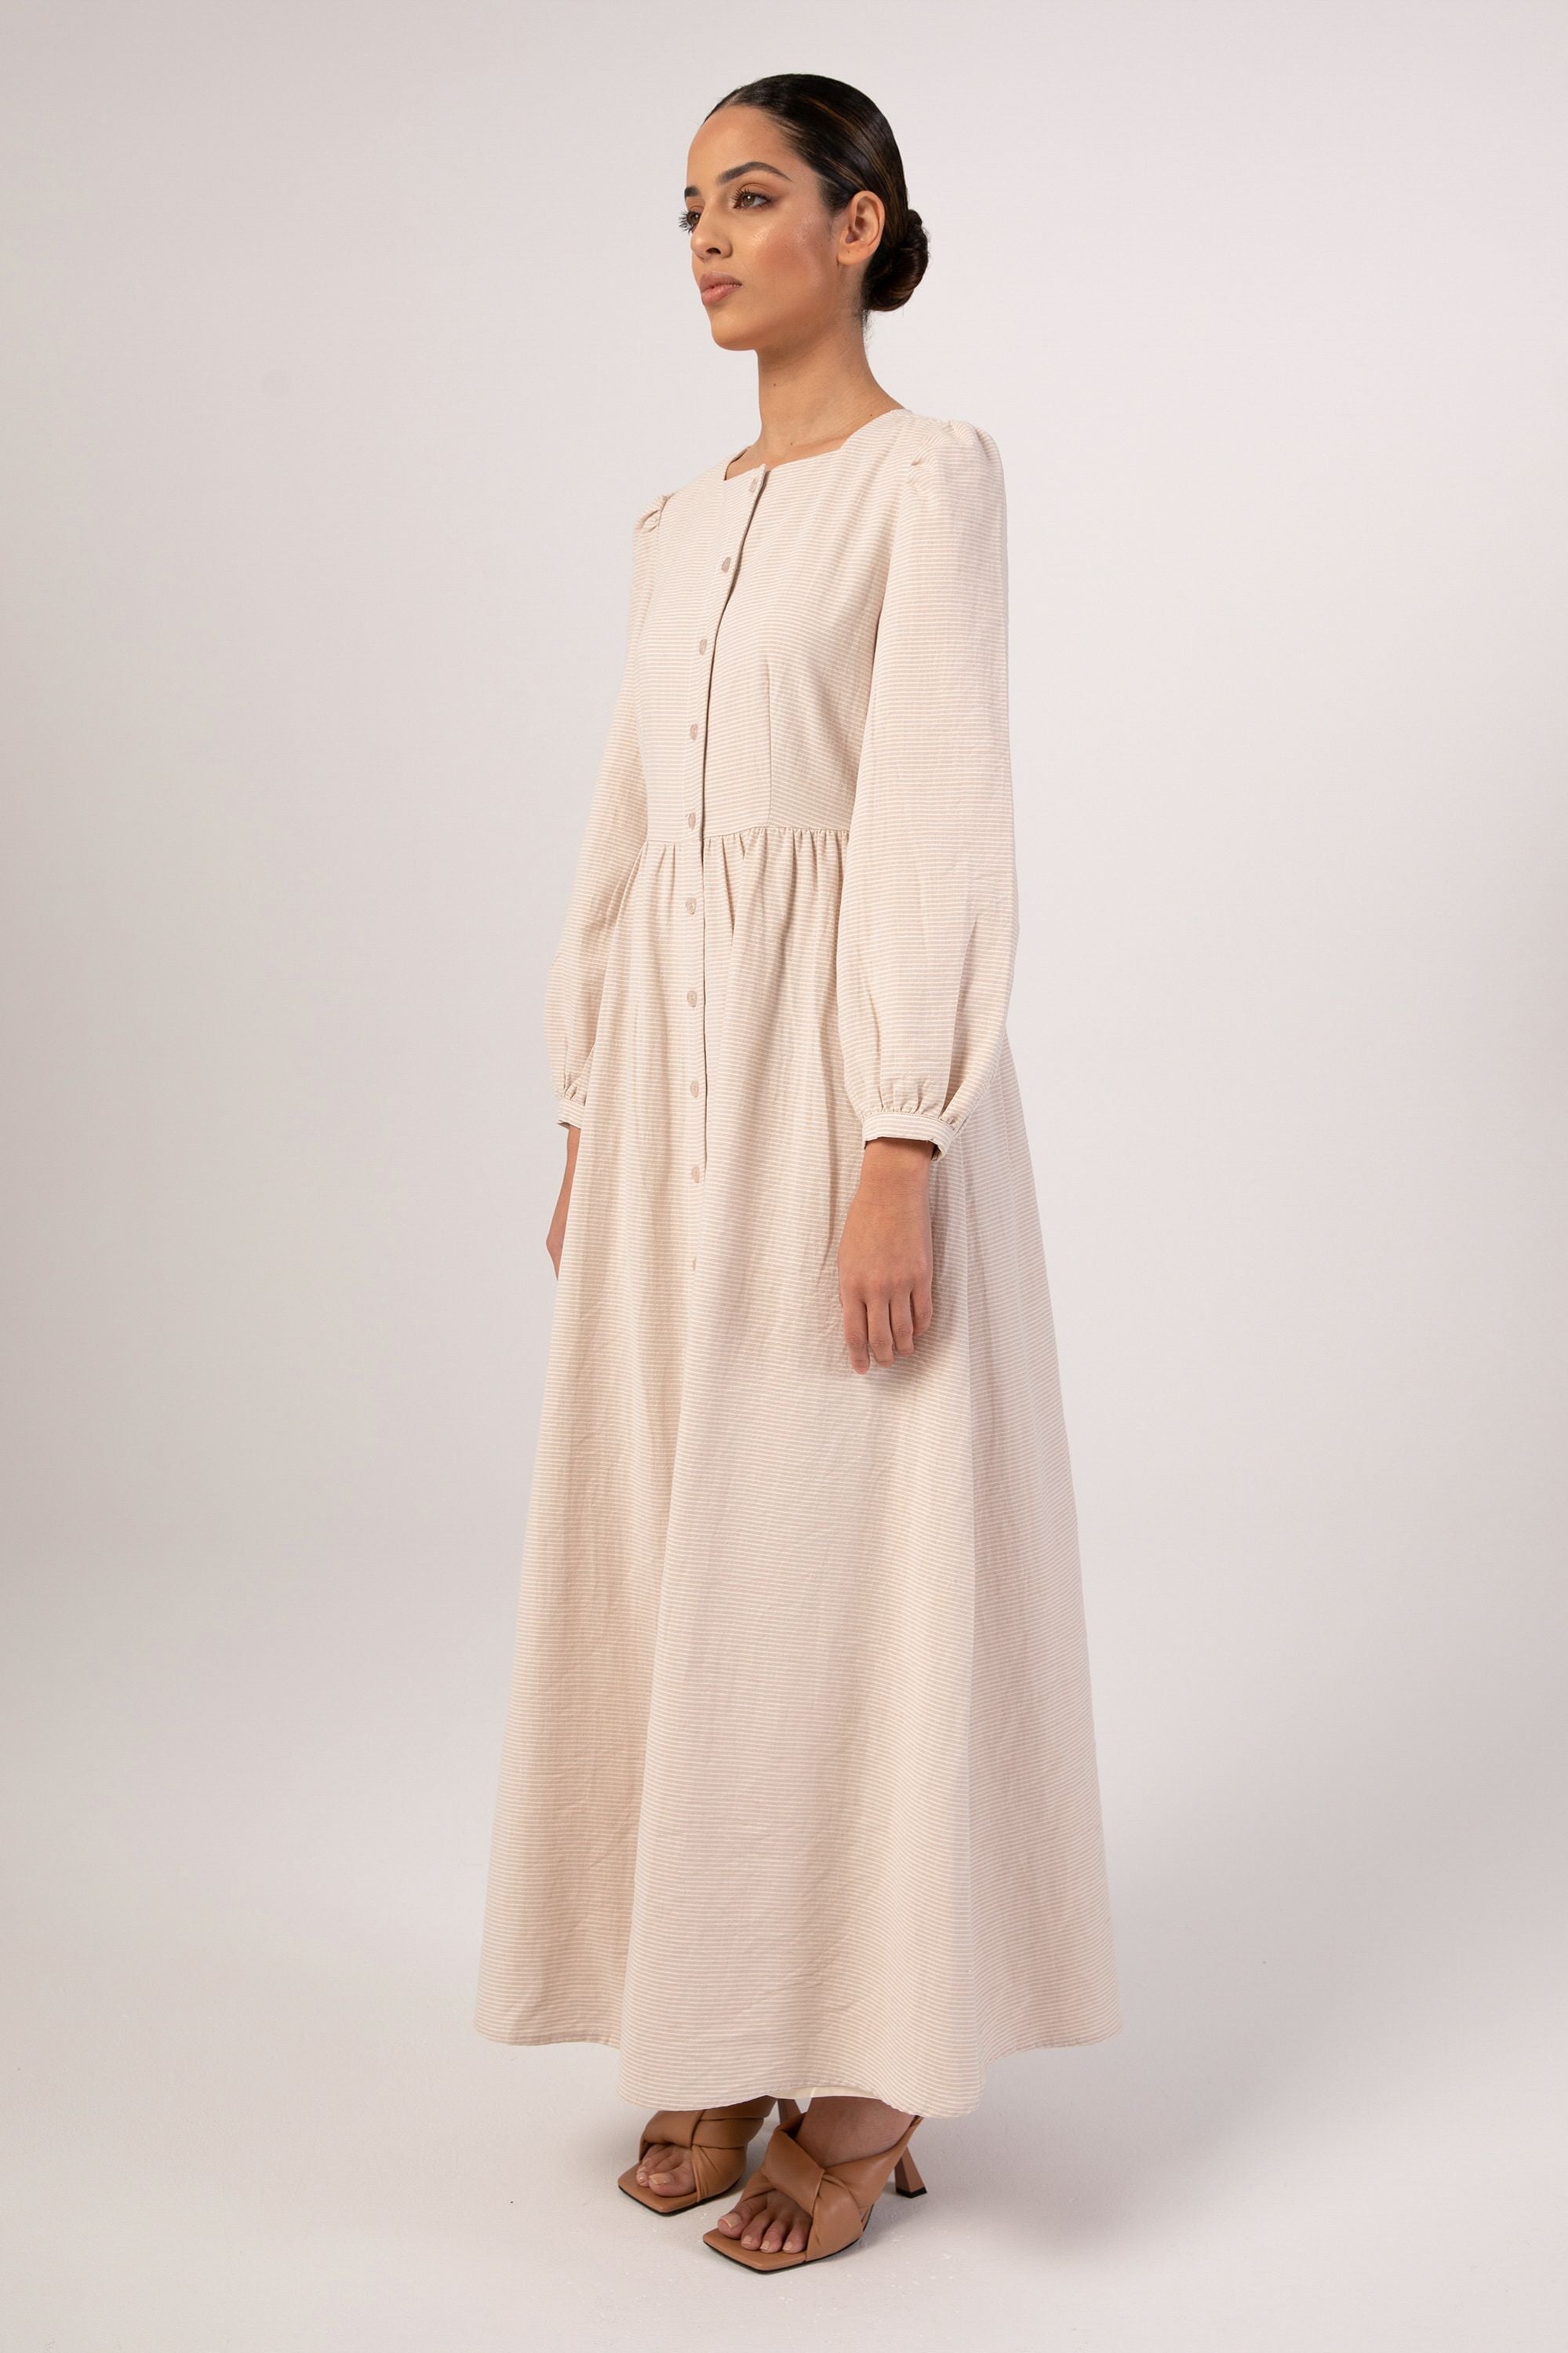 Safiya Natural Button Front Maxi Dress Veiled Collection 